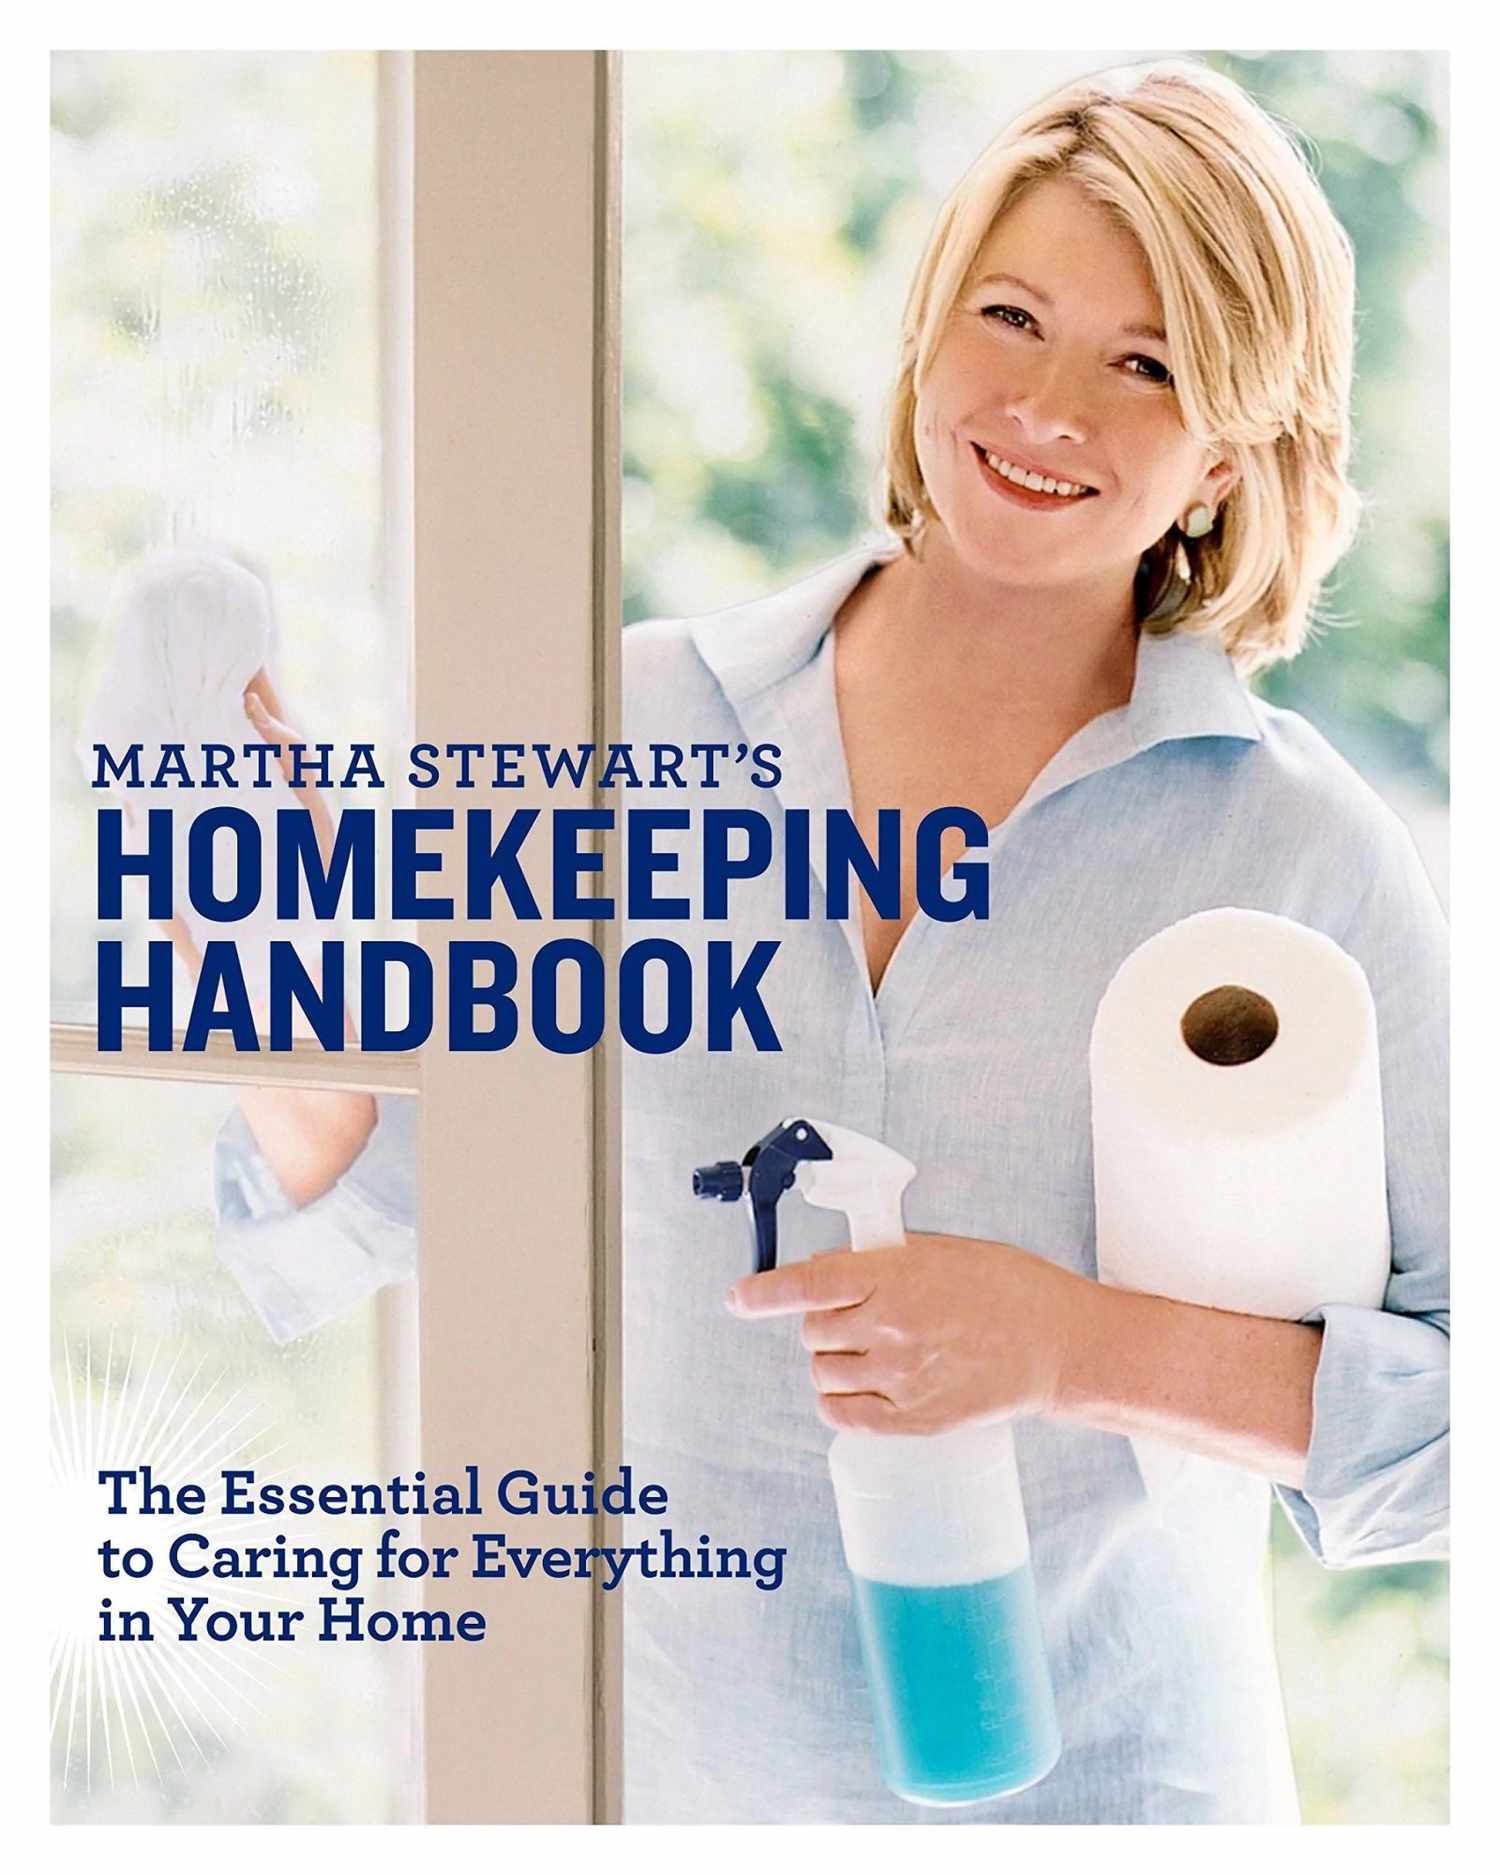 Martha Stewart’s Homekeeping Handbook, $45, martha.com